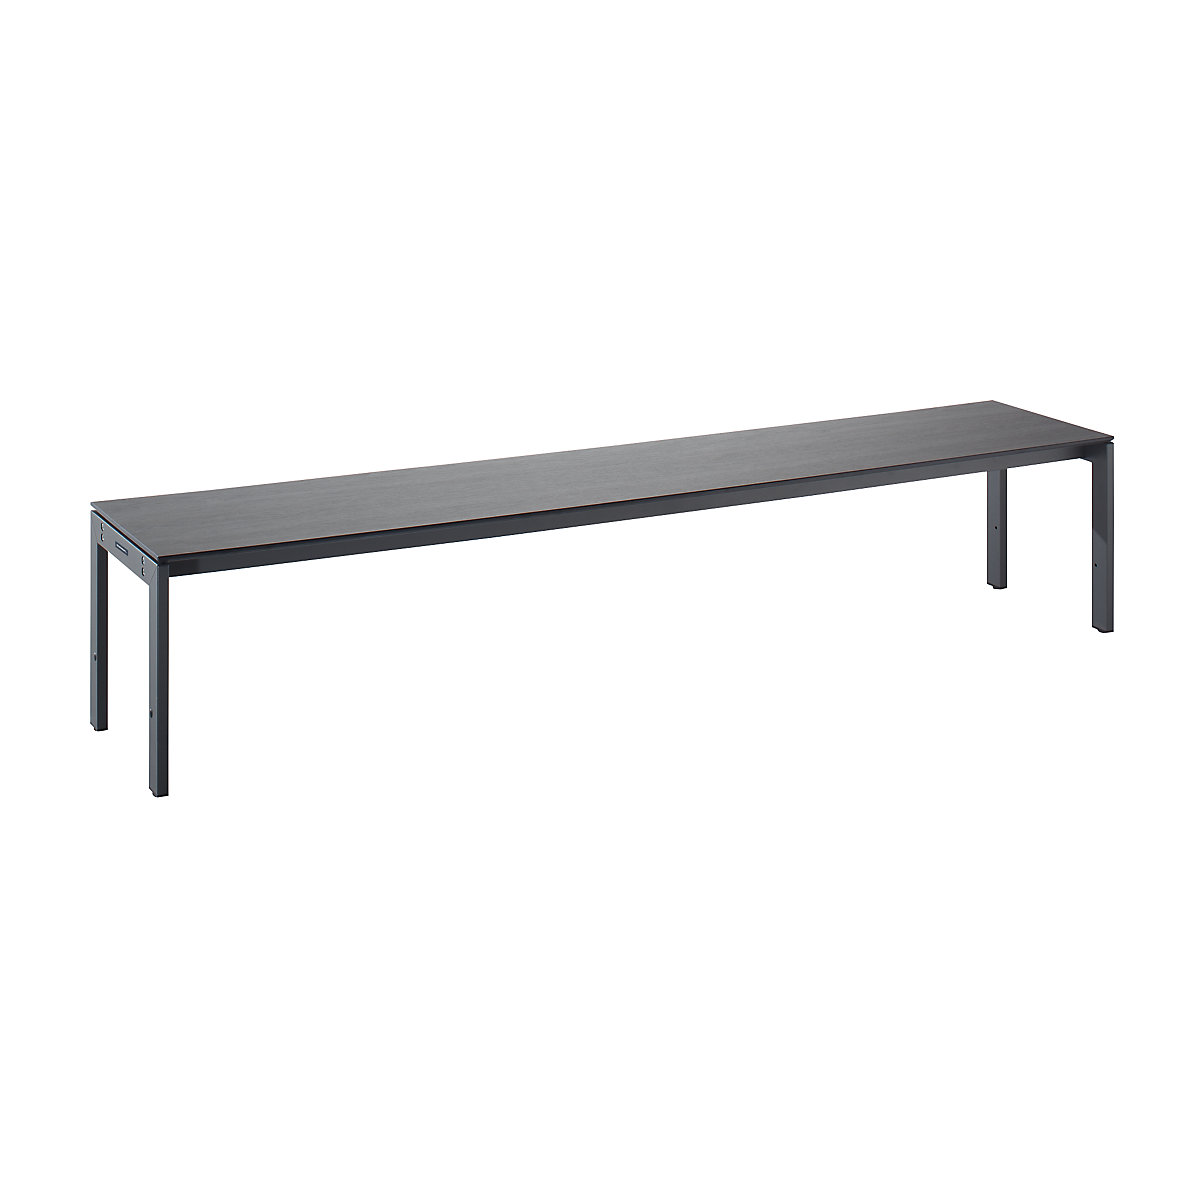 EUROKRAFTpro – Changing room bench with steel frame, LxHxD 2000 x 415 x 400 mm, oak silver seat